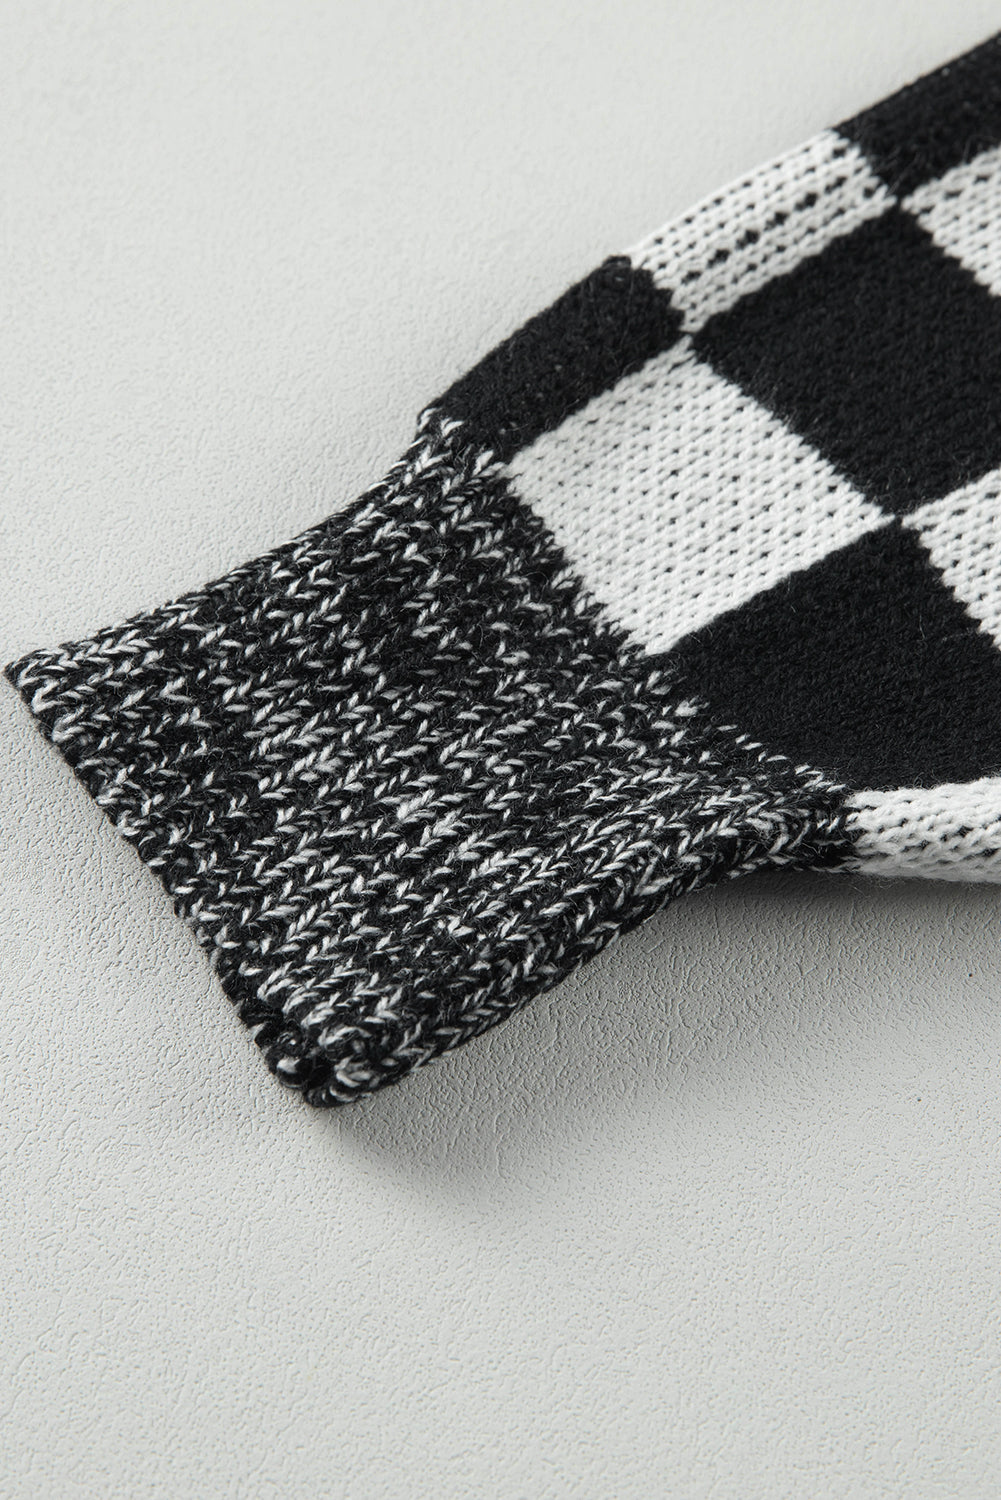 Mint Green Checkered Print Drop Shoulder Sweater